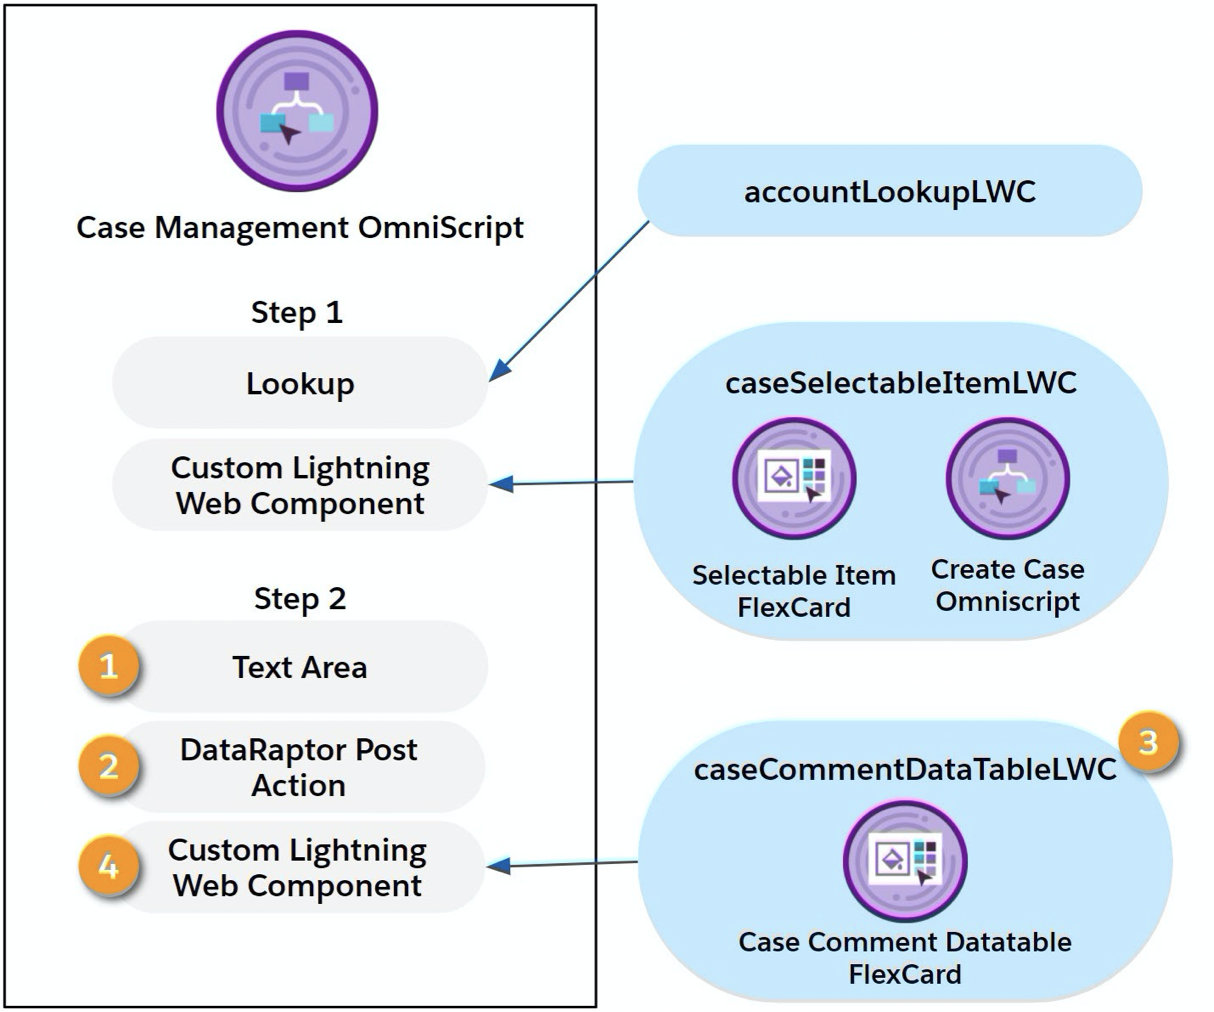 The Case Management OmniScript contains standard OmniScript components and custom Lightning web components, which hold OmniScripts and FlexCards.